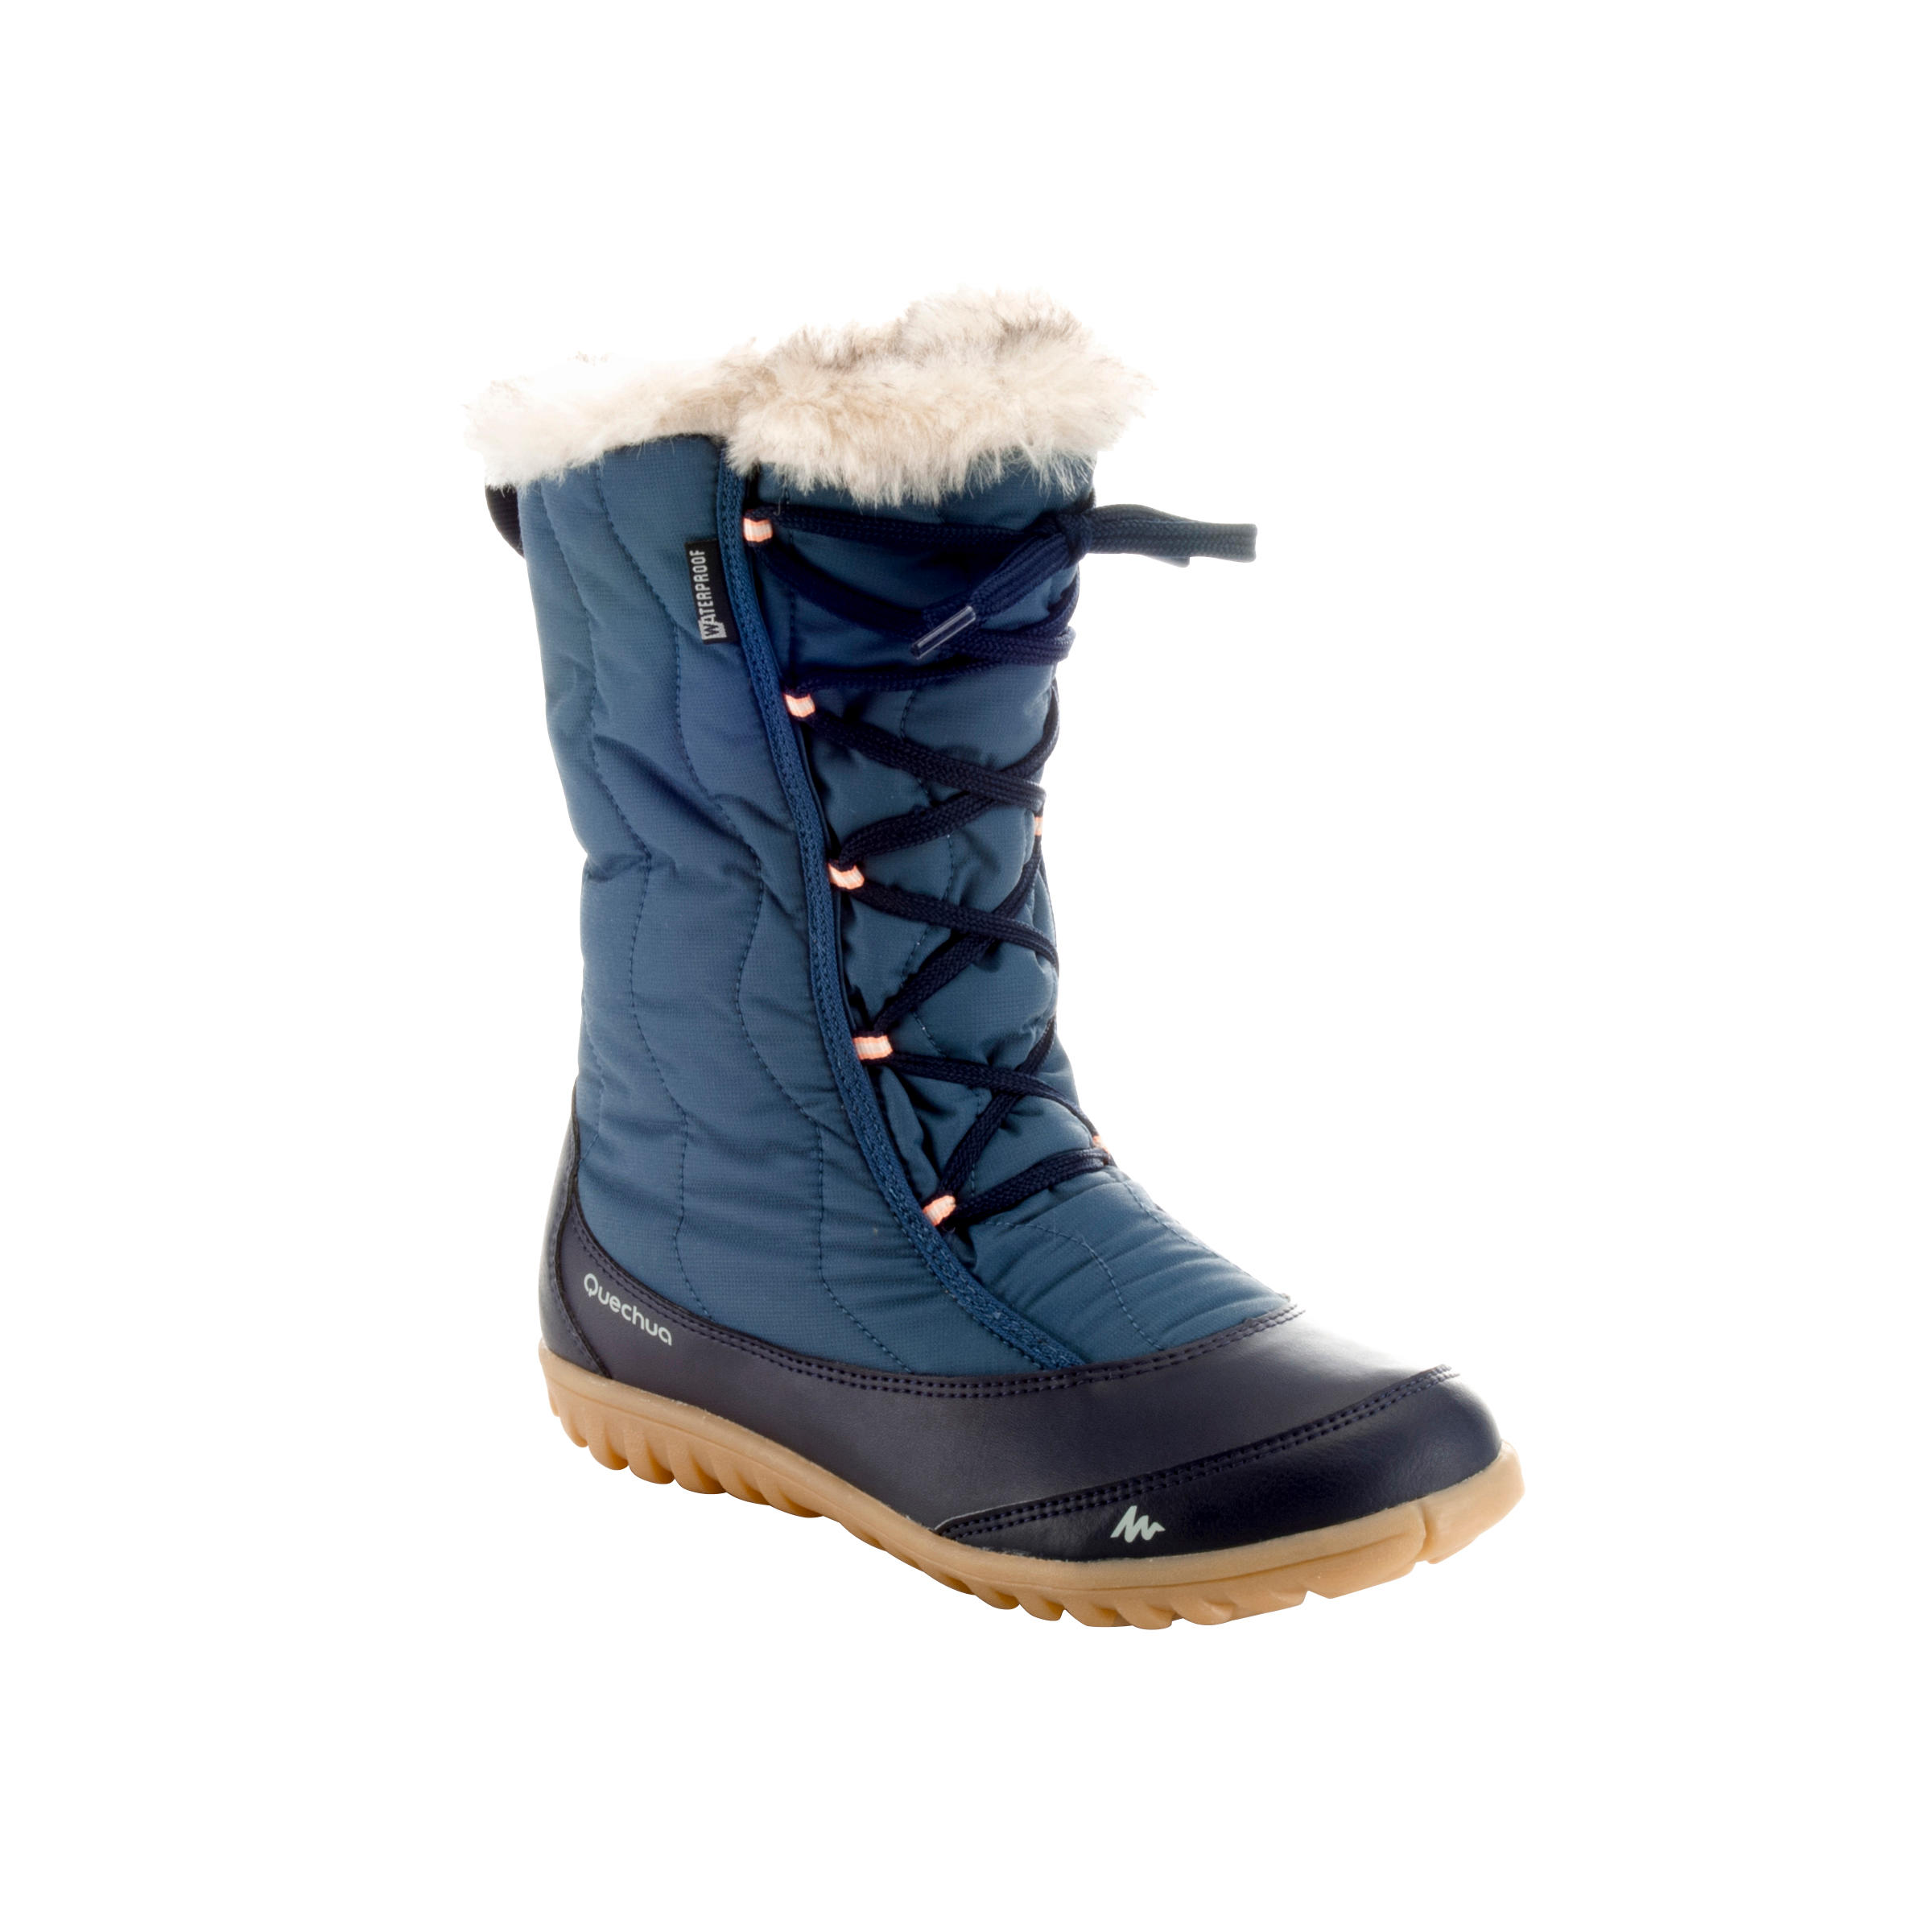 QUECHUA SH900 Women's Warm and Waterproof Snow Hiking Boots - China-Blue